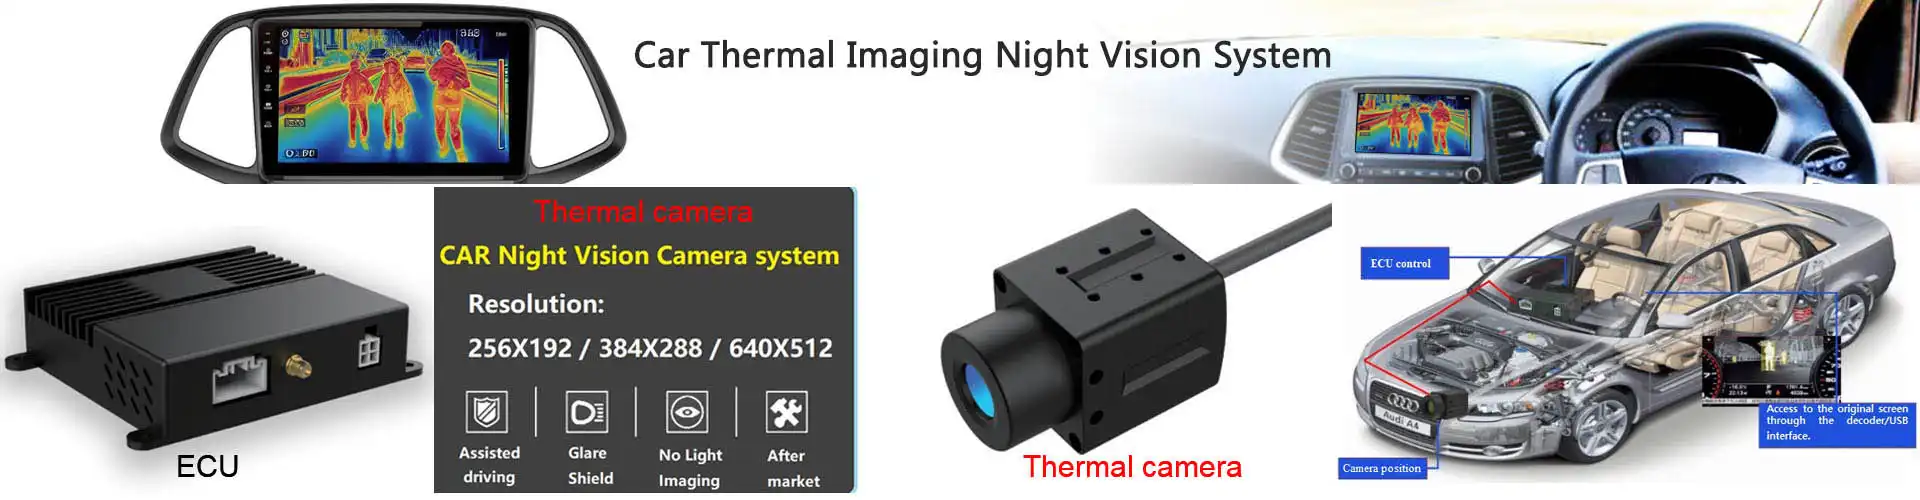 thermal imaging camera: iSun Digitech Limited